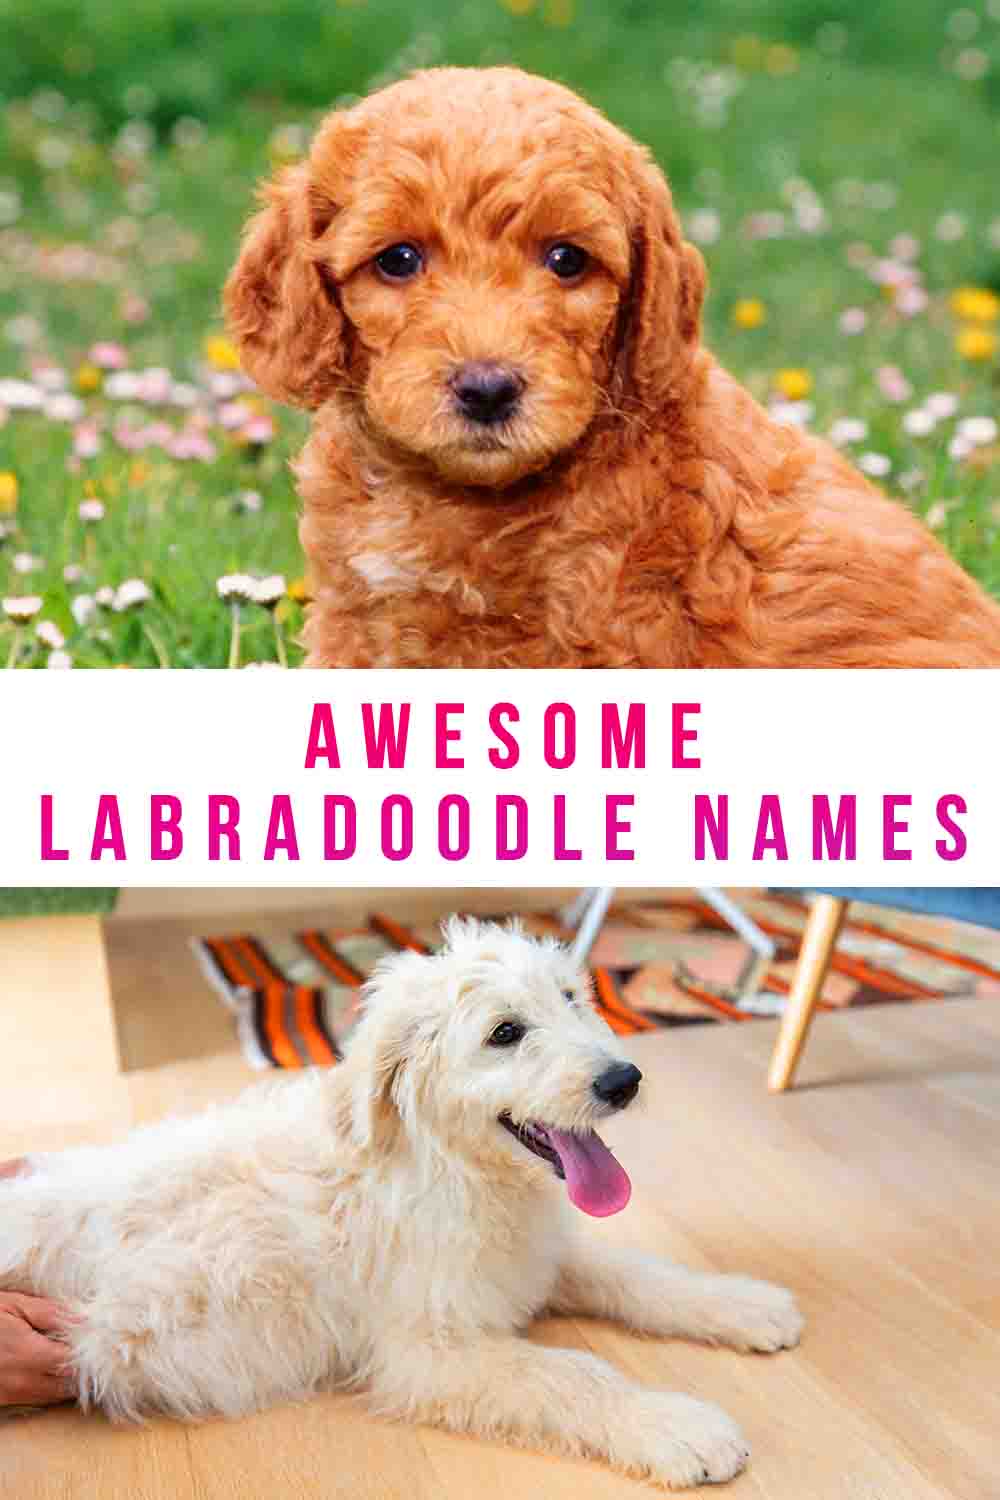 Labradoodle Names – 250 Adorable Ideas For Naming Your Puppy